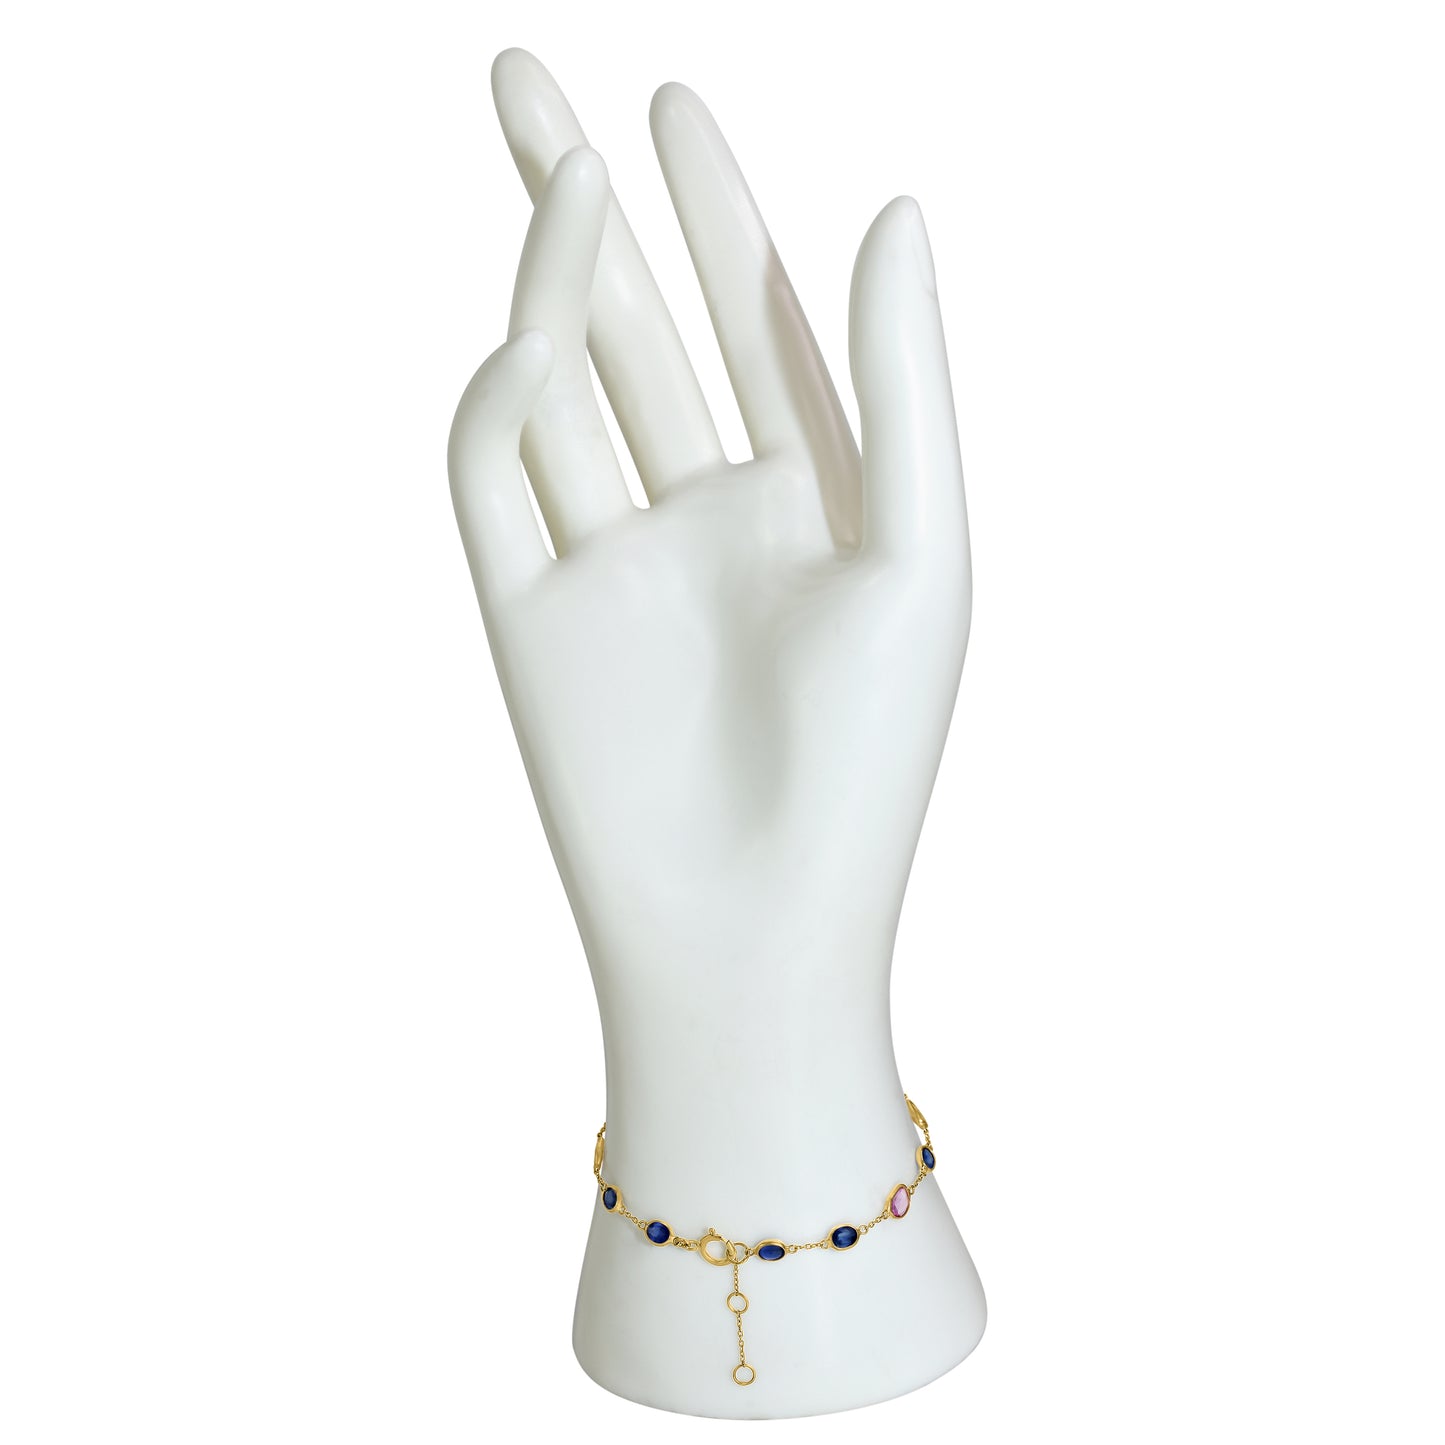 18k Multi Sapphire Chain Bracelet